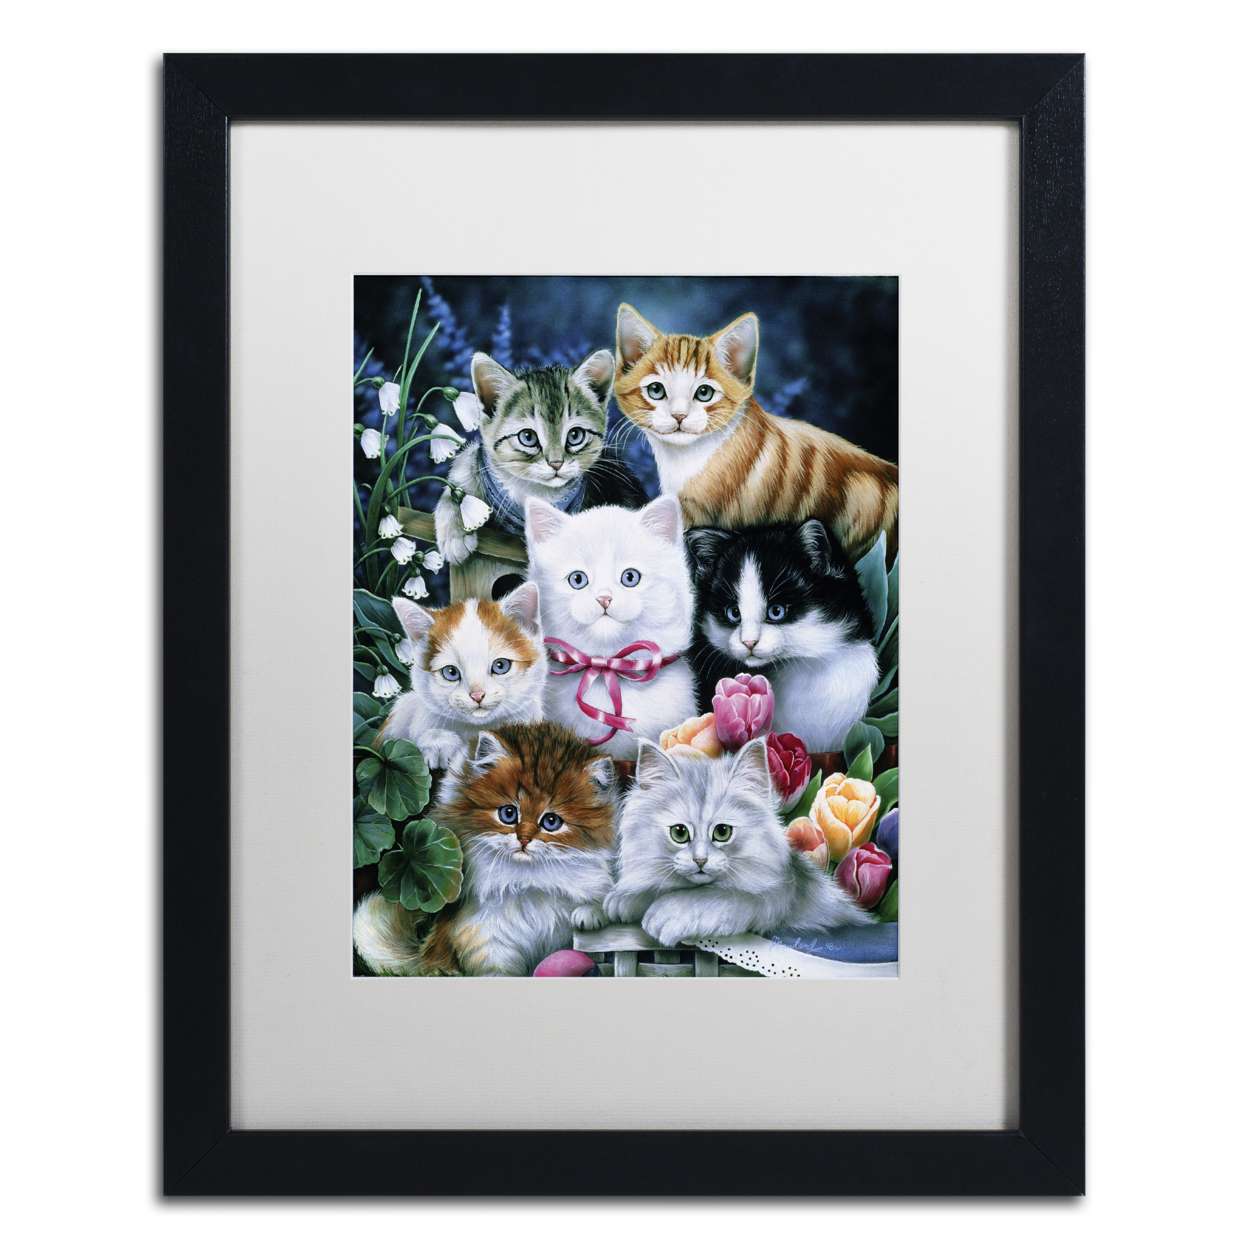 Jenny Newland 'Kittens' Black Wooden Framed Art 18 X 22 Inches